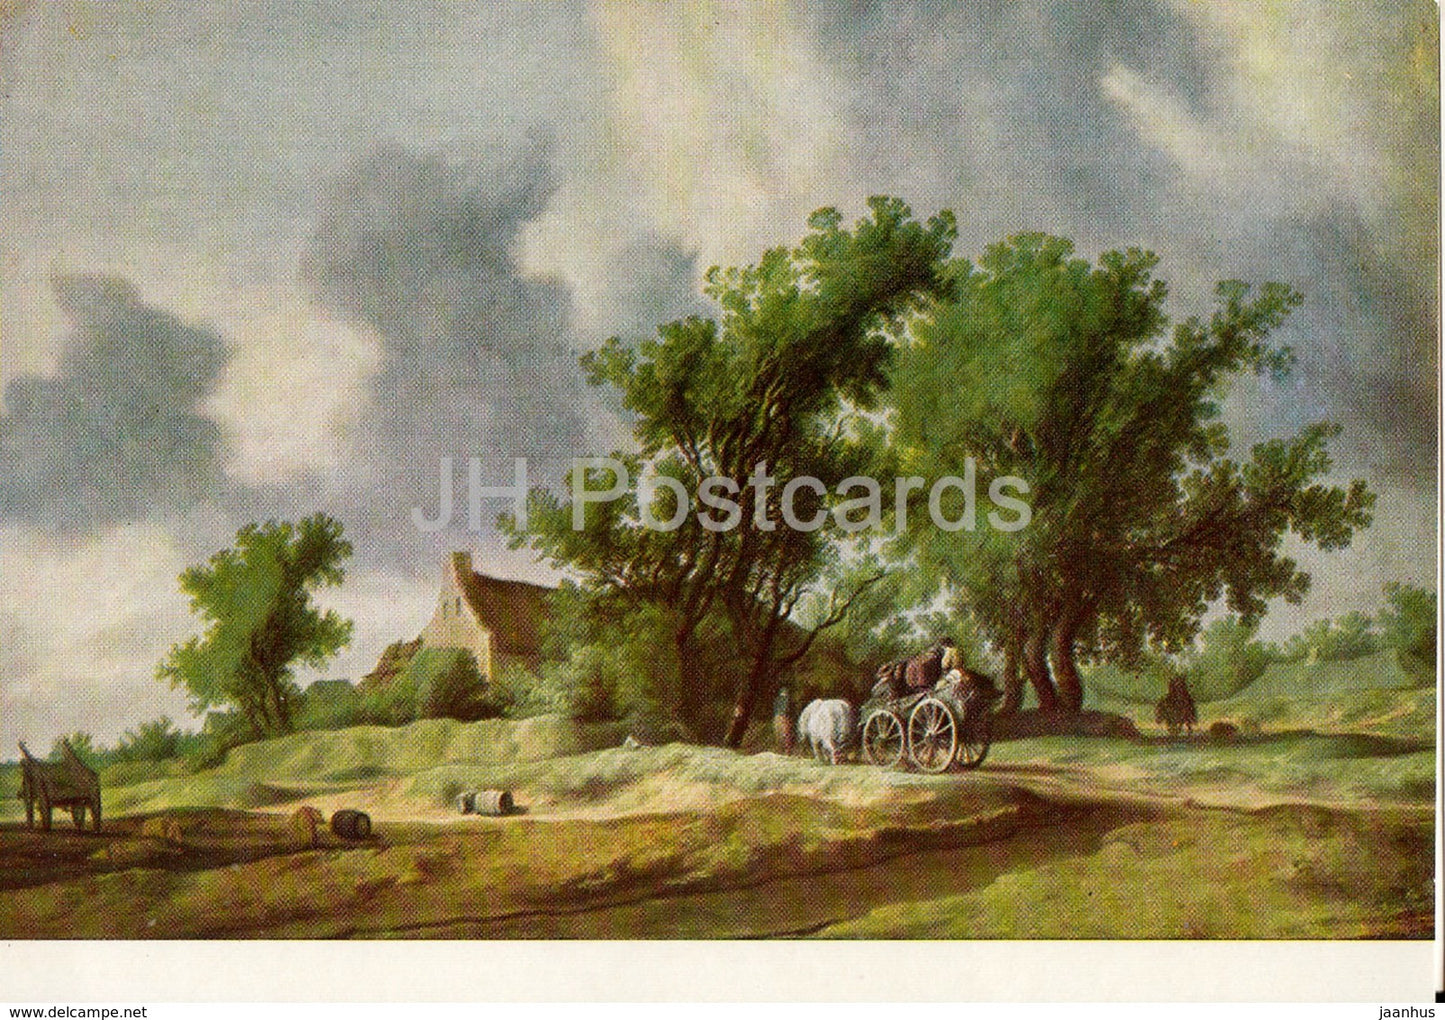 painting by Salomon van Ruysdael - After the Rain - Dutch art - Hungary - unused - JH Postcards